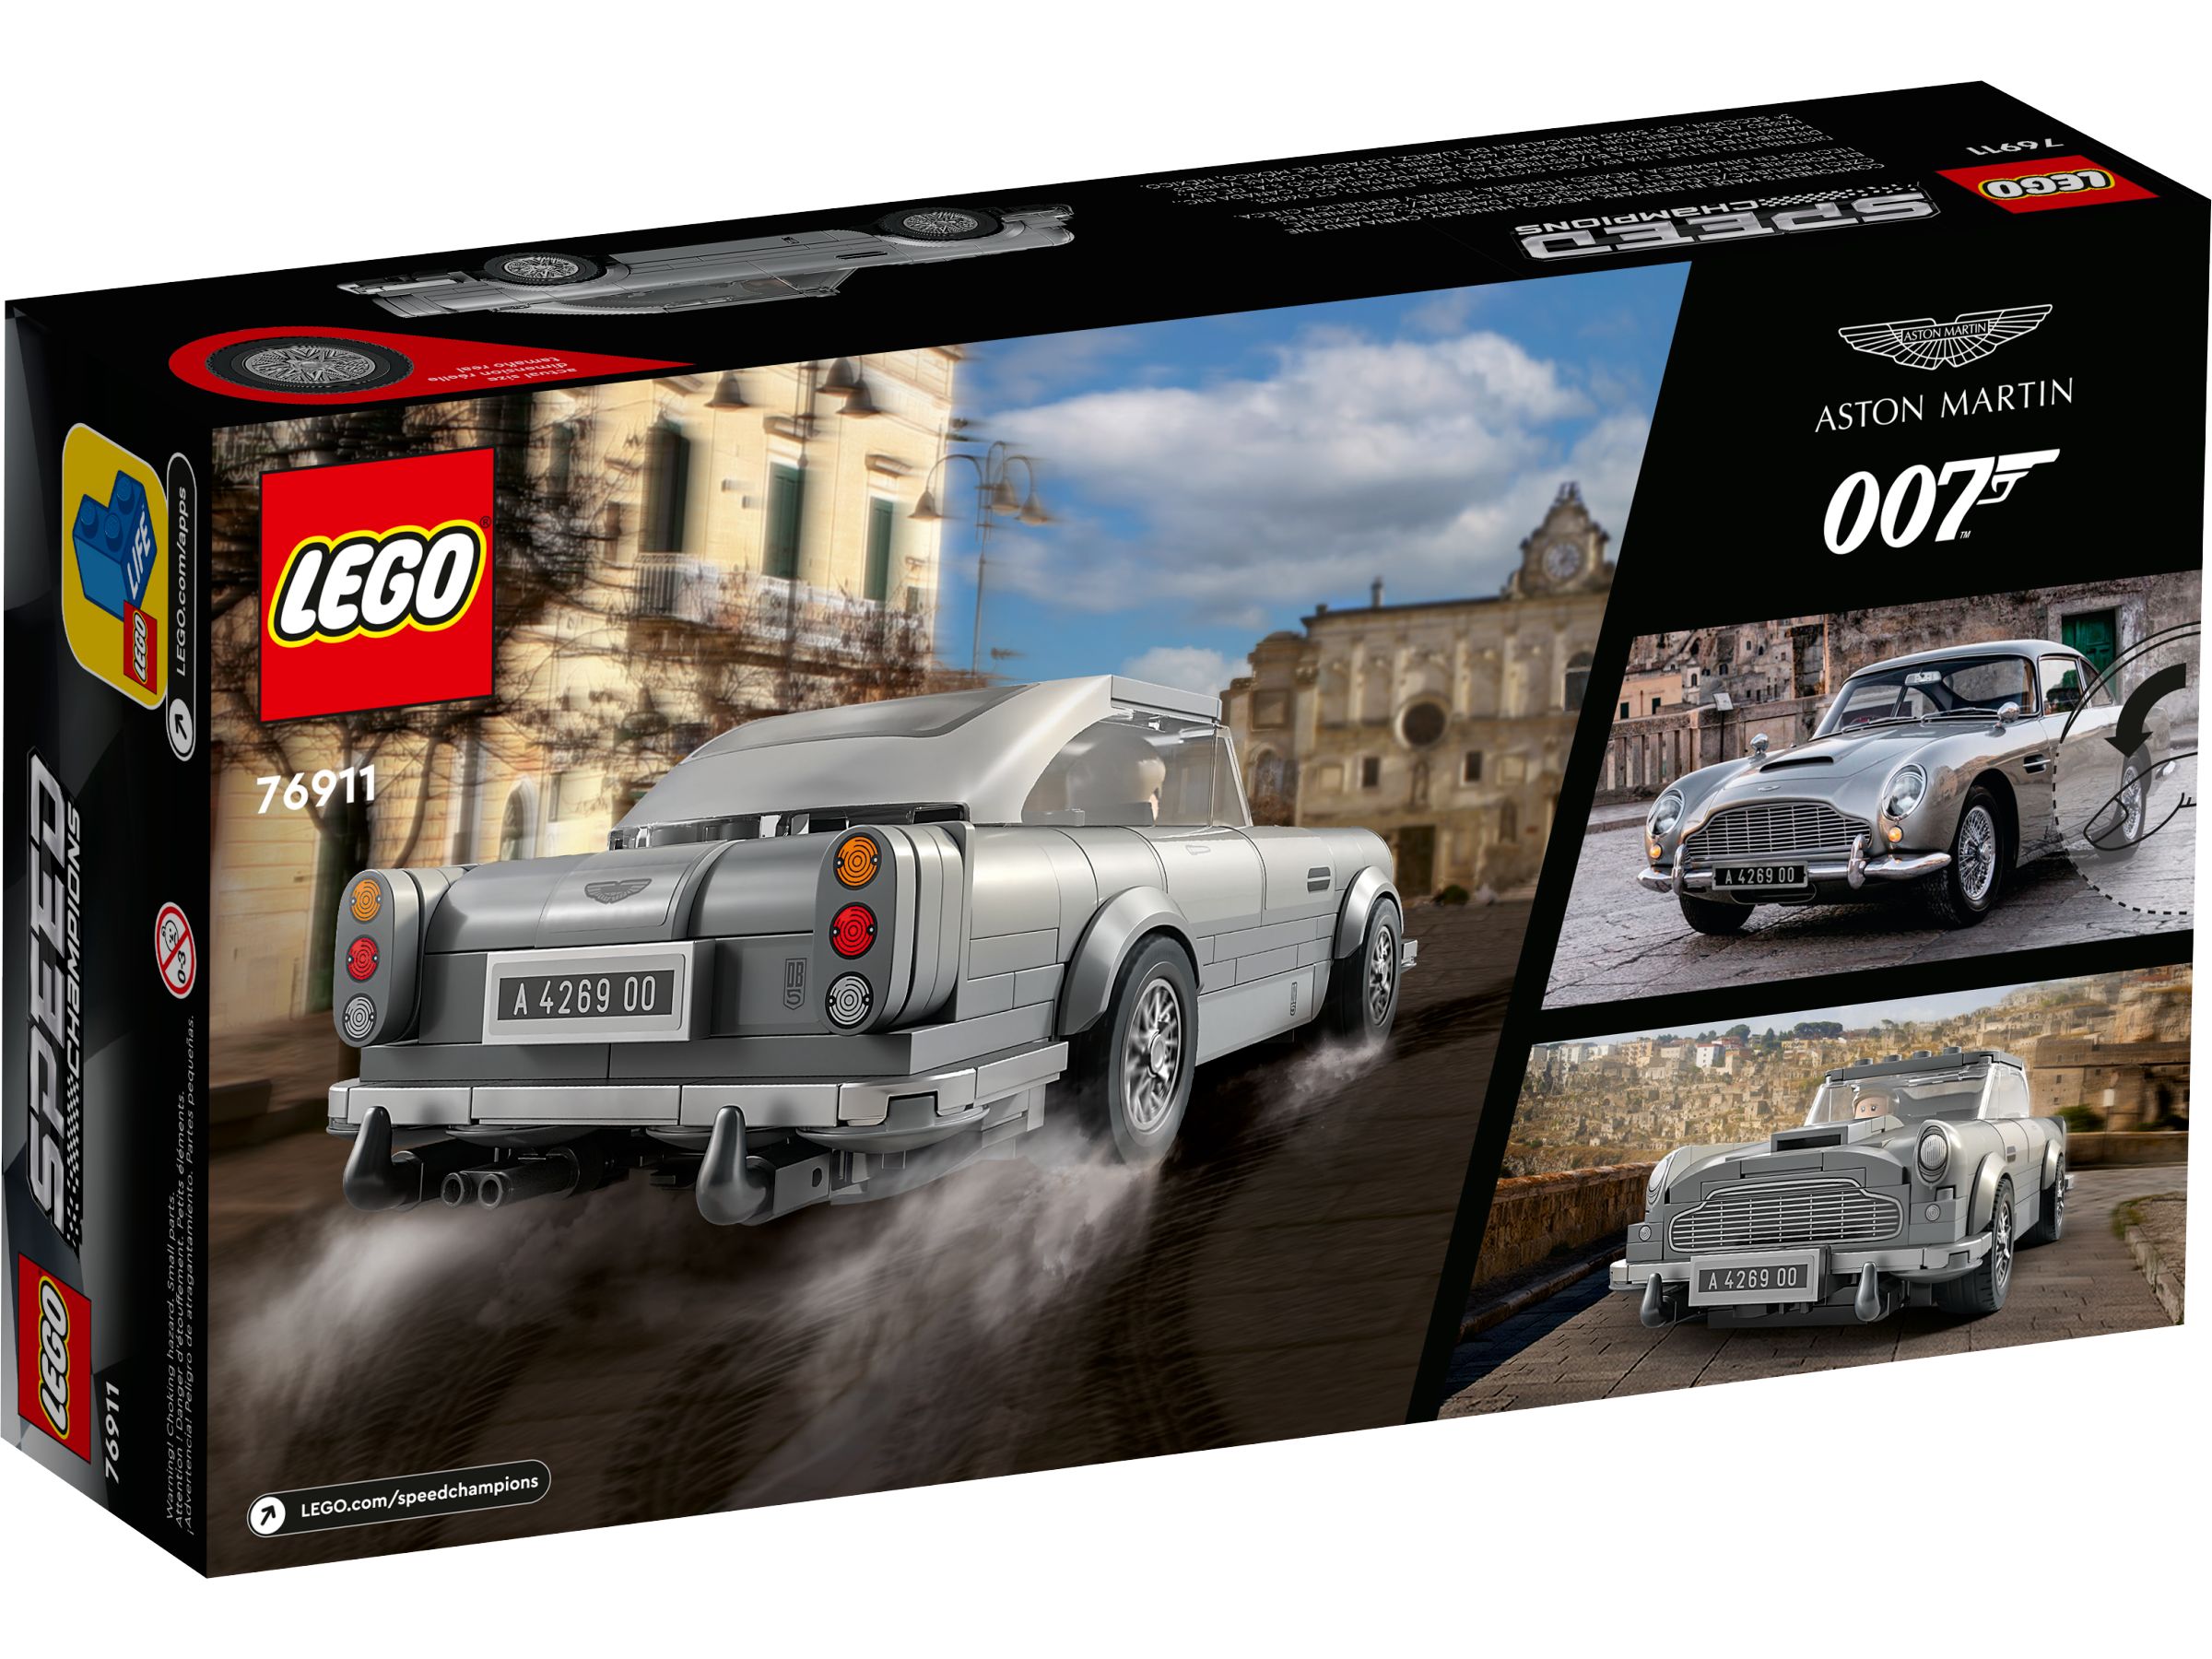 LEGO Speed Champions 76911 007 Aston Martin DB5 LEGO_76911_alt6.jpg